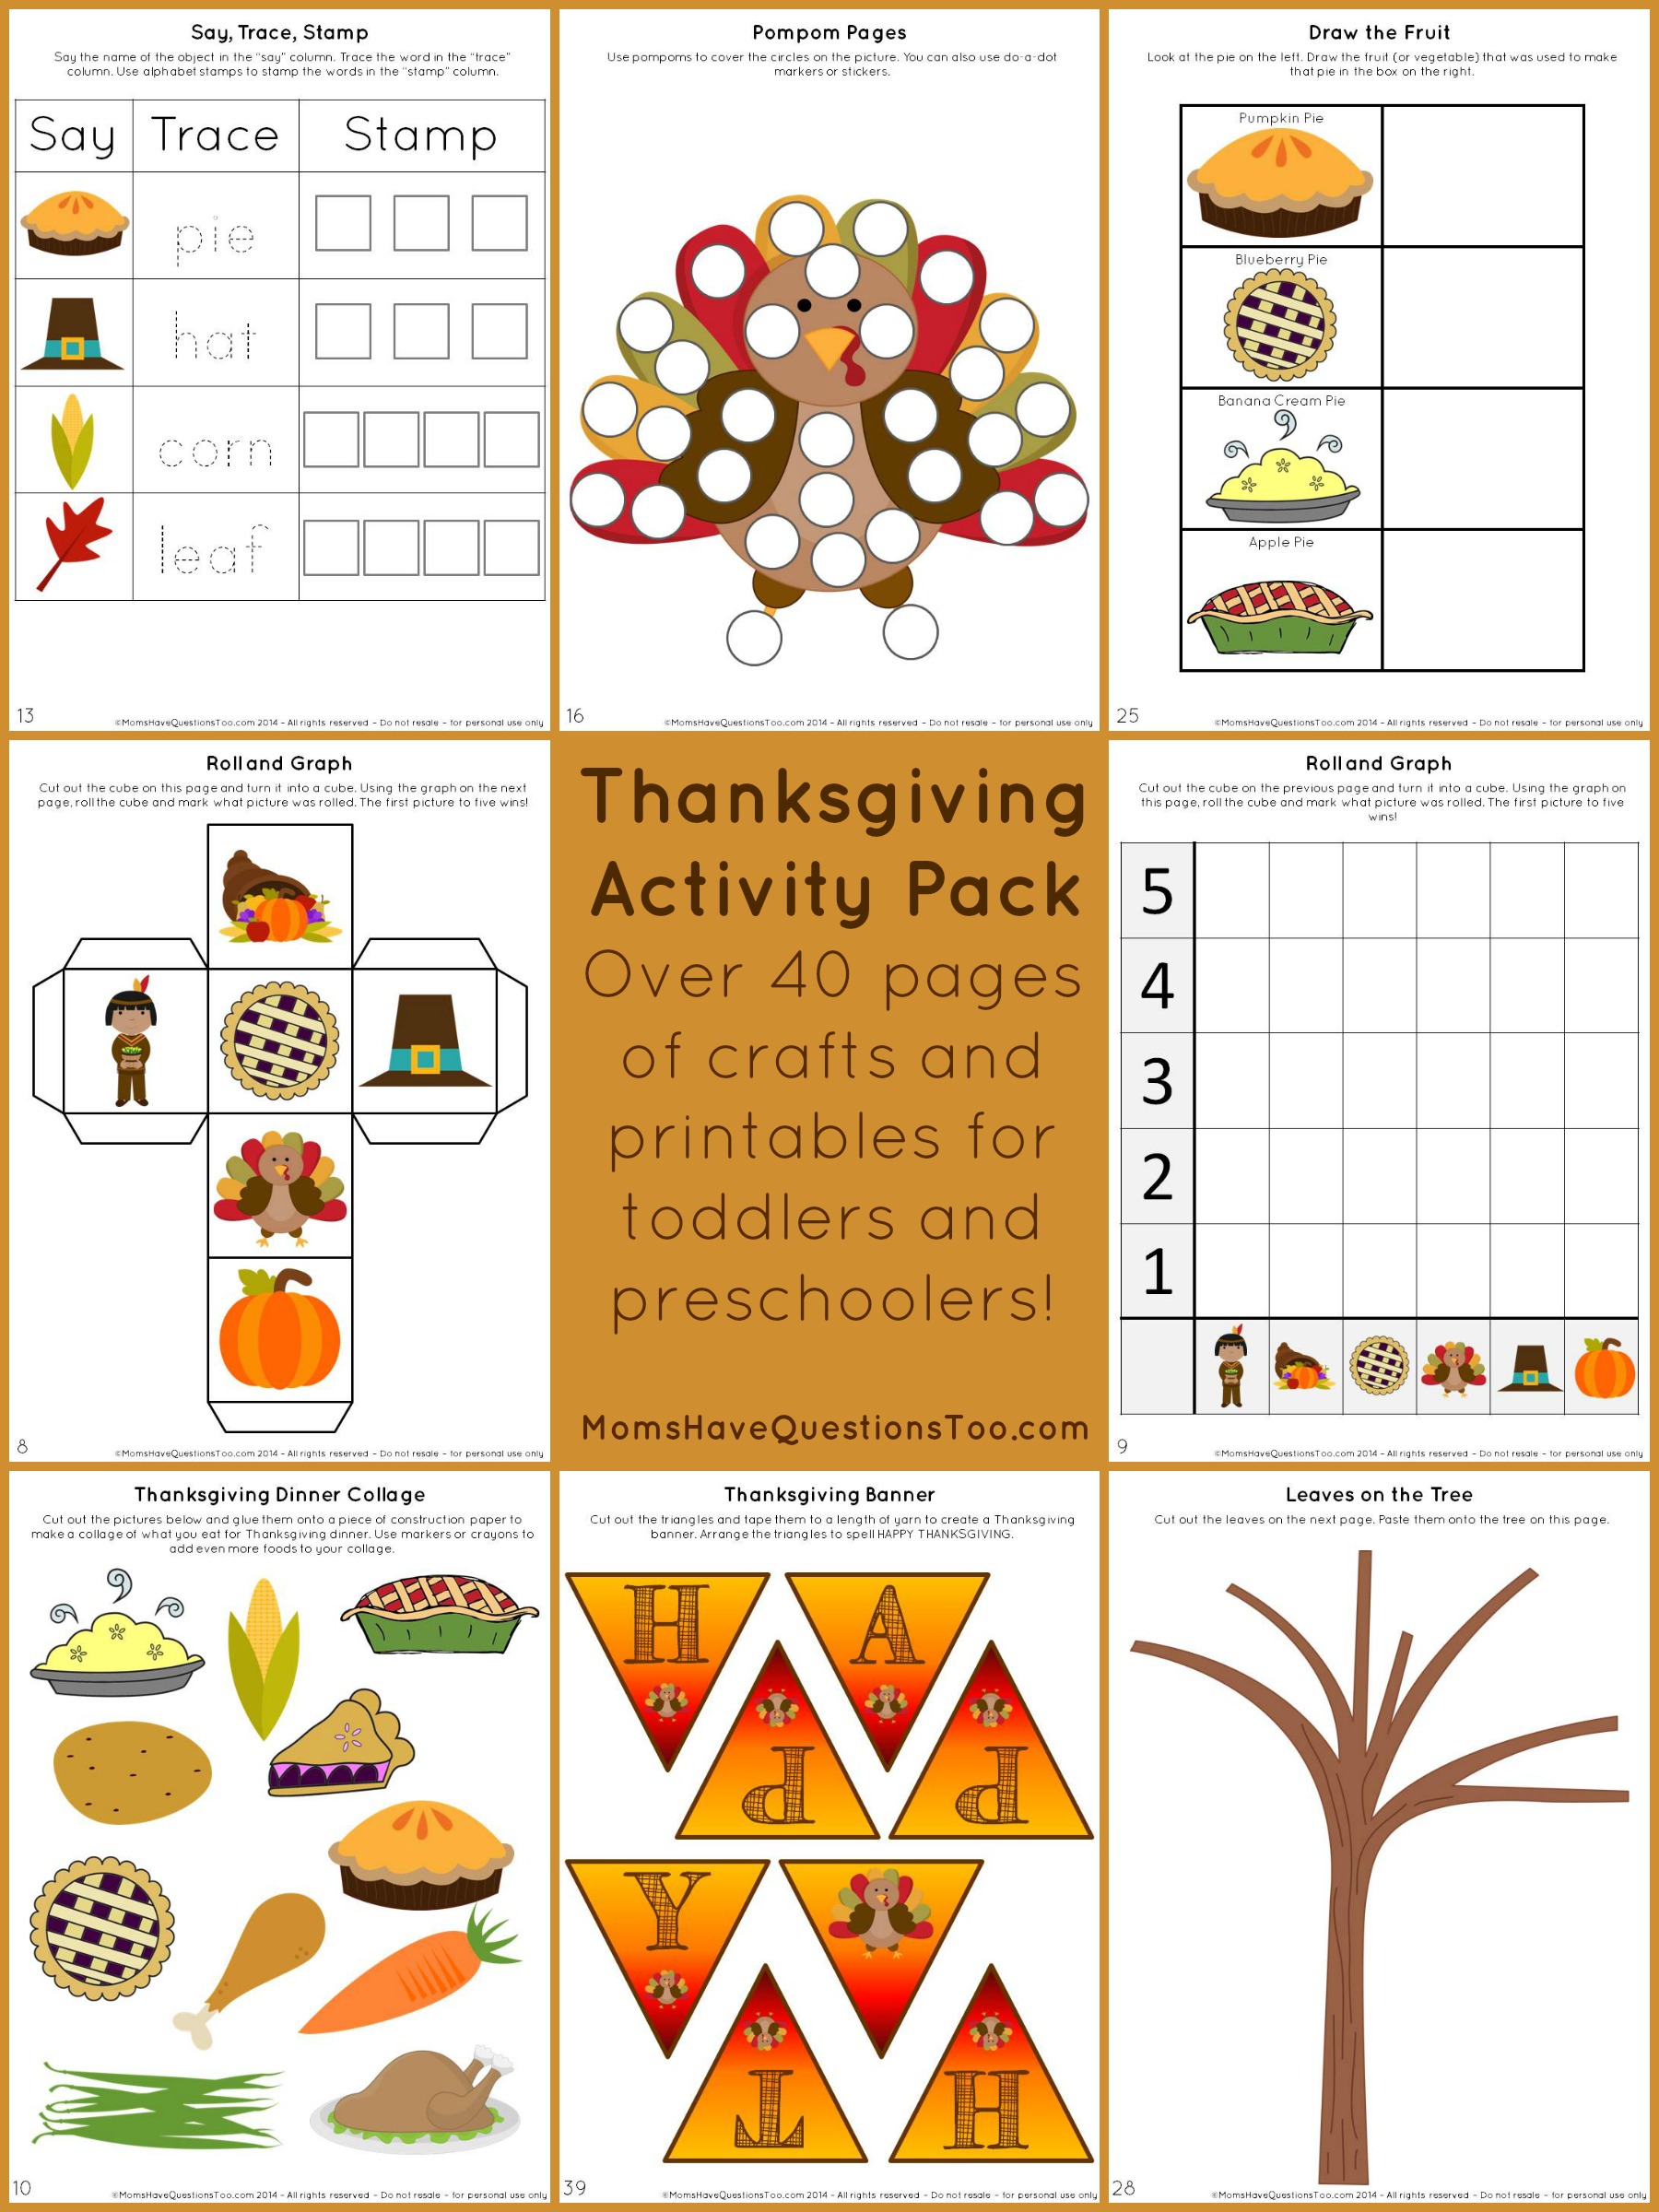 printable kindergarten worksheets thanksgiving